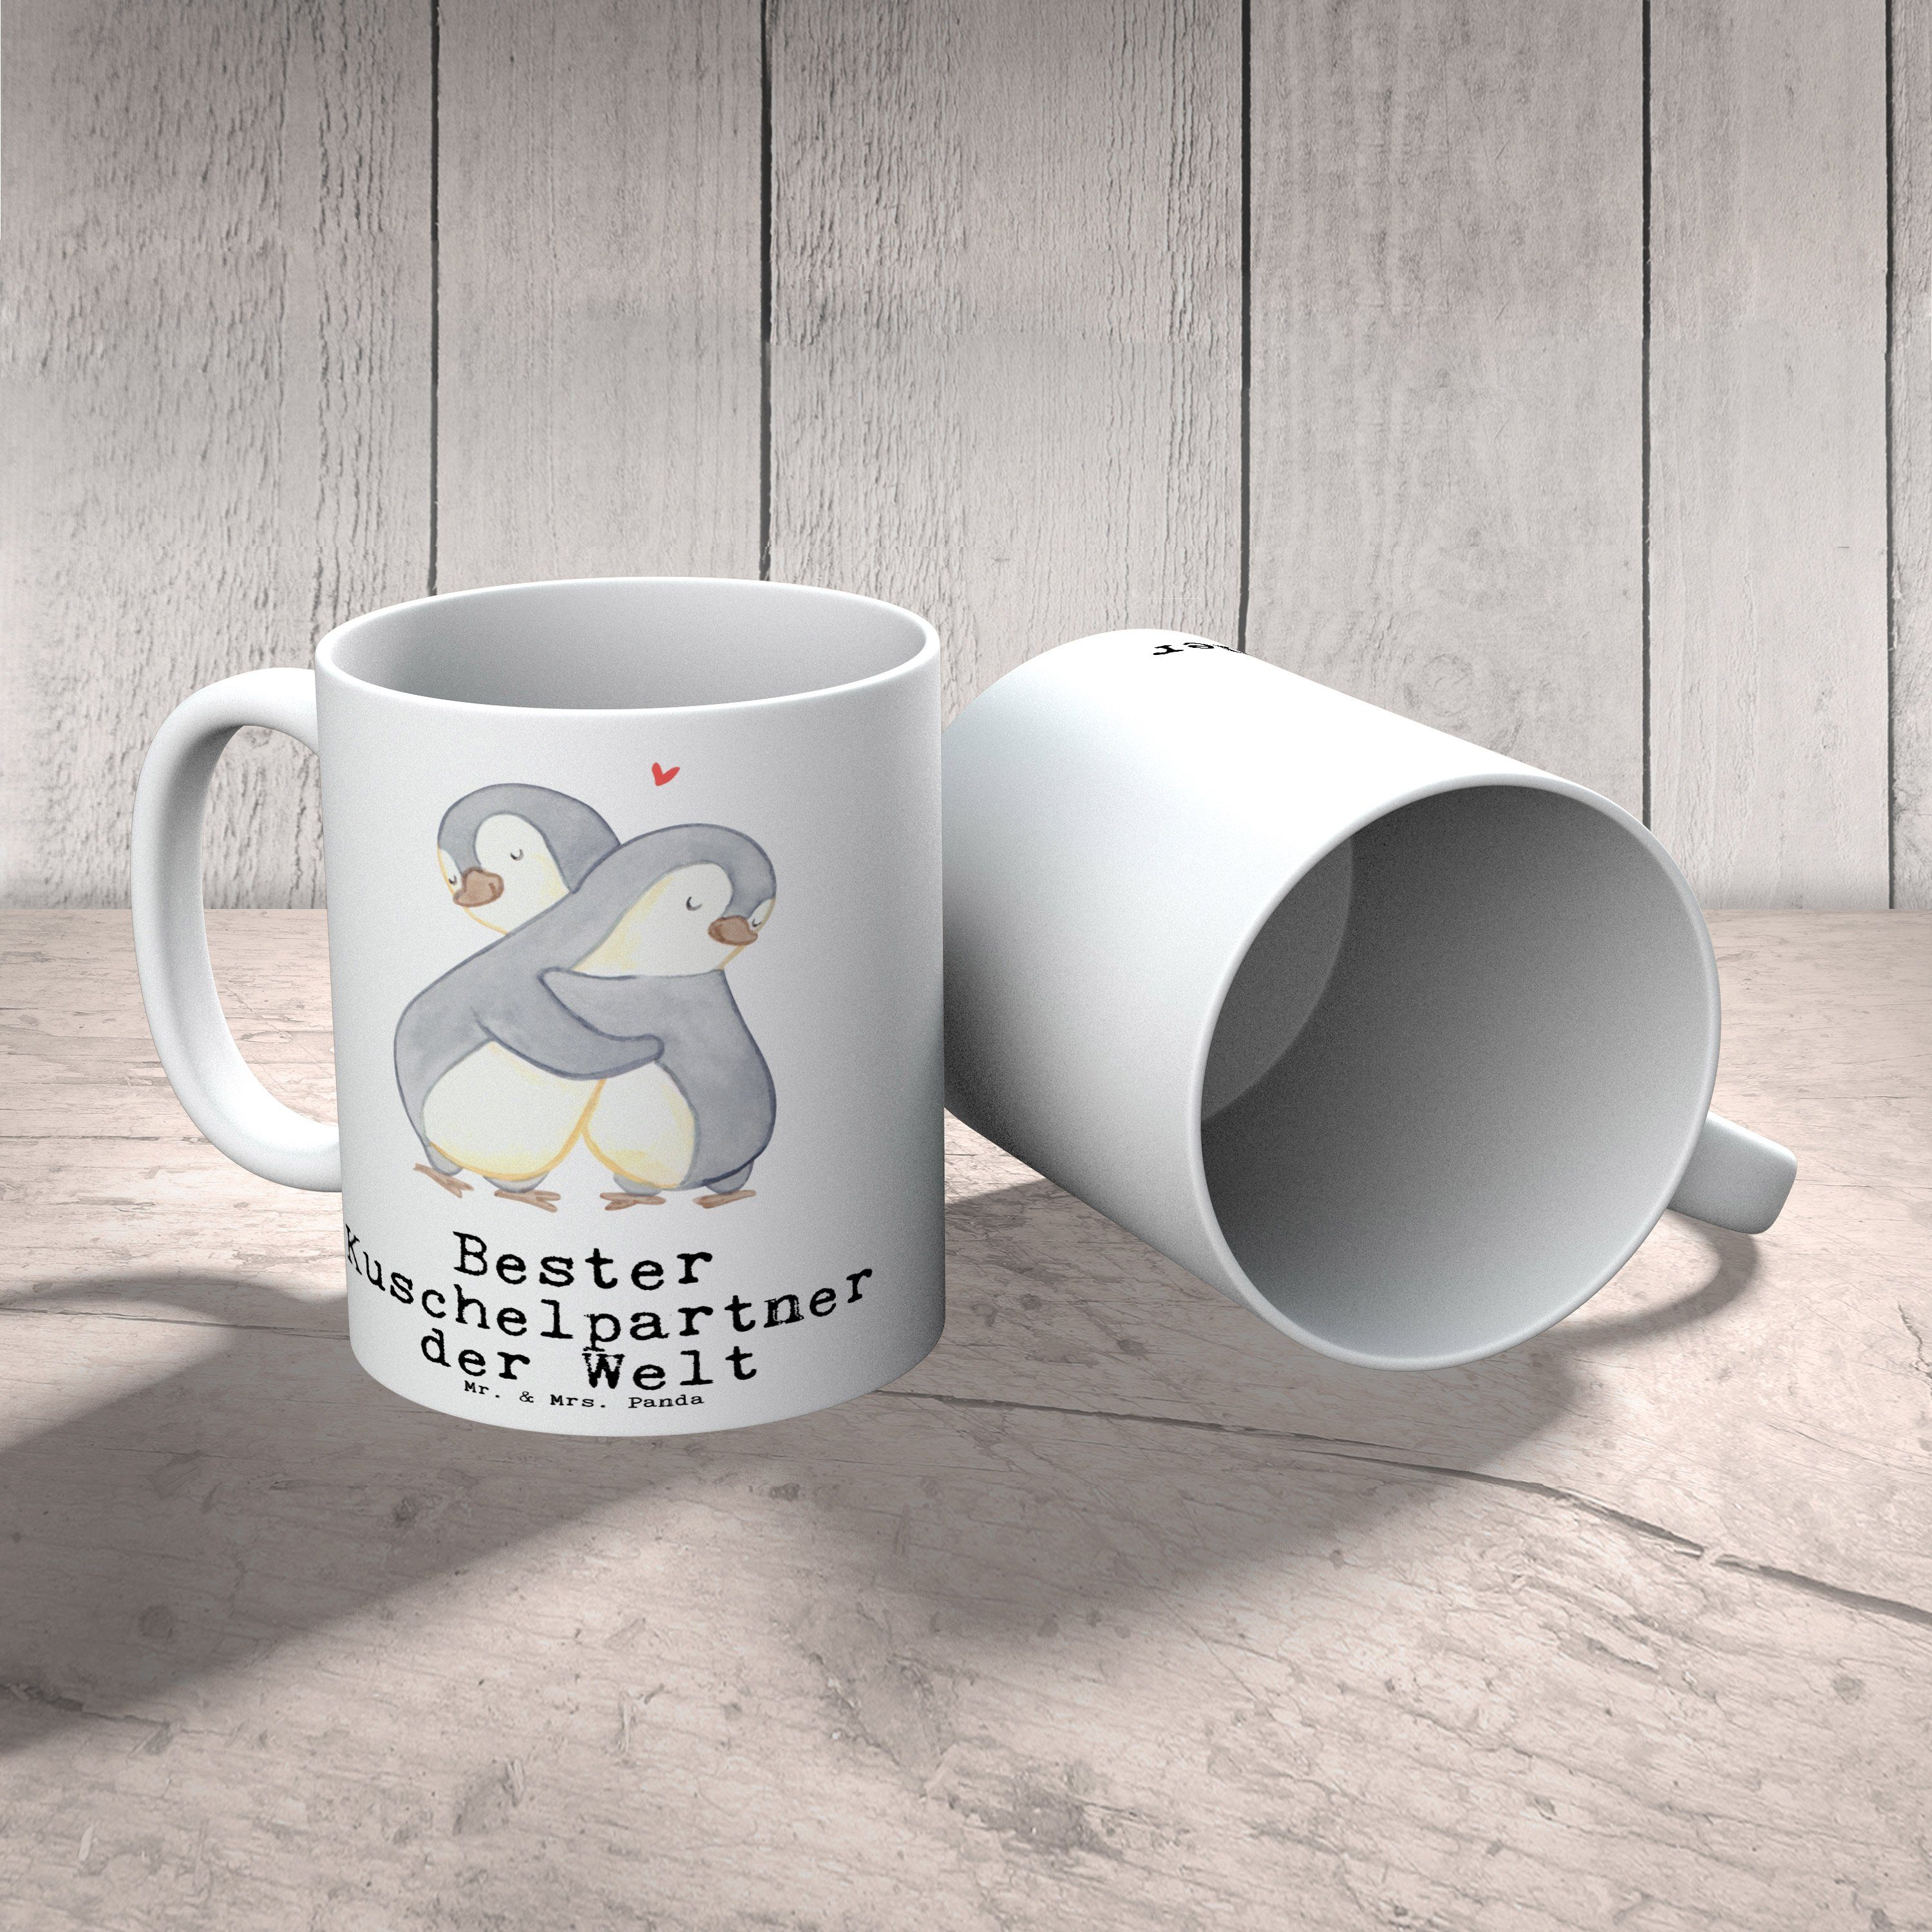 der Tasse Geschenktipp, Geschenk, & machen, Bester Keramik - - Kaffeetasse, Freude Ehepartner, Welt Pinguin Kuschelpartner Mrs. Danke, Lebenspartner, Büro, Weiß Mr. Tee, Panda